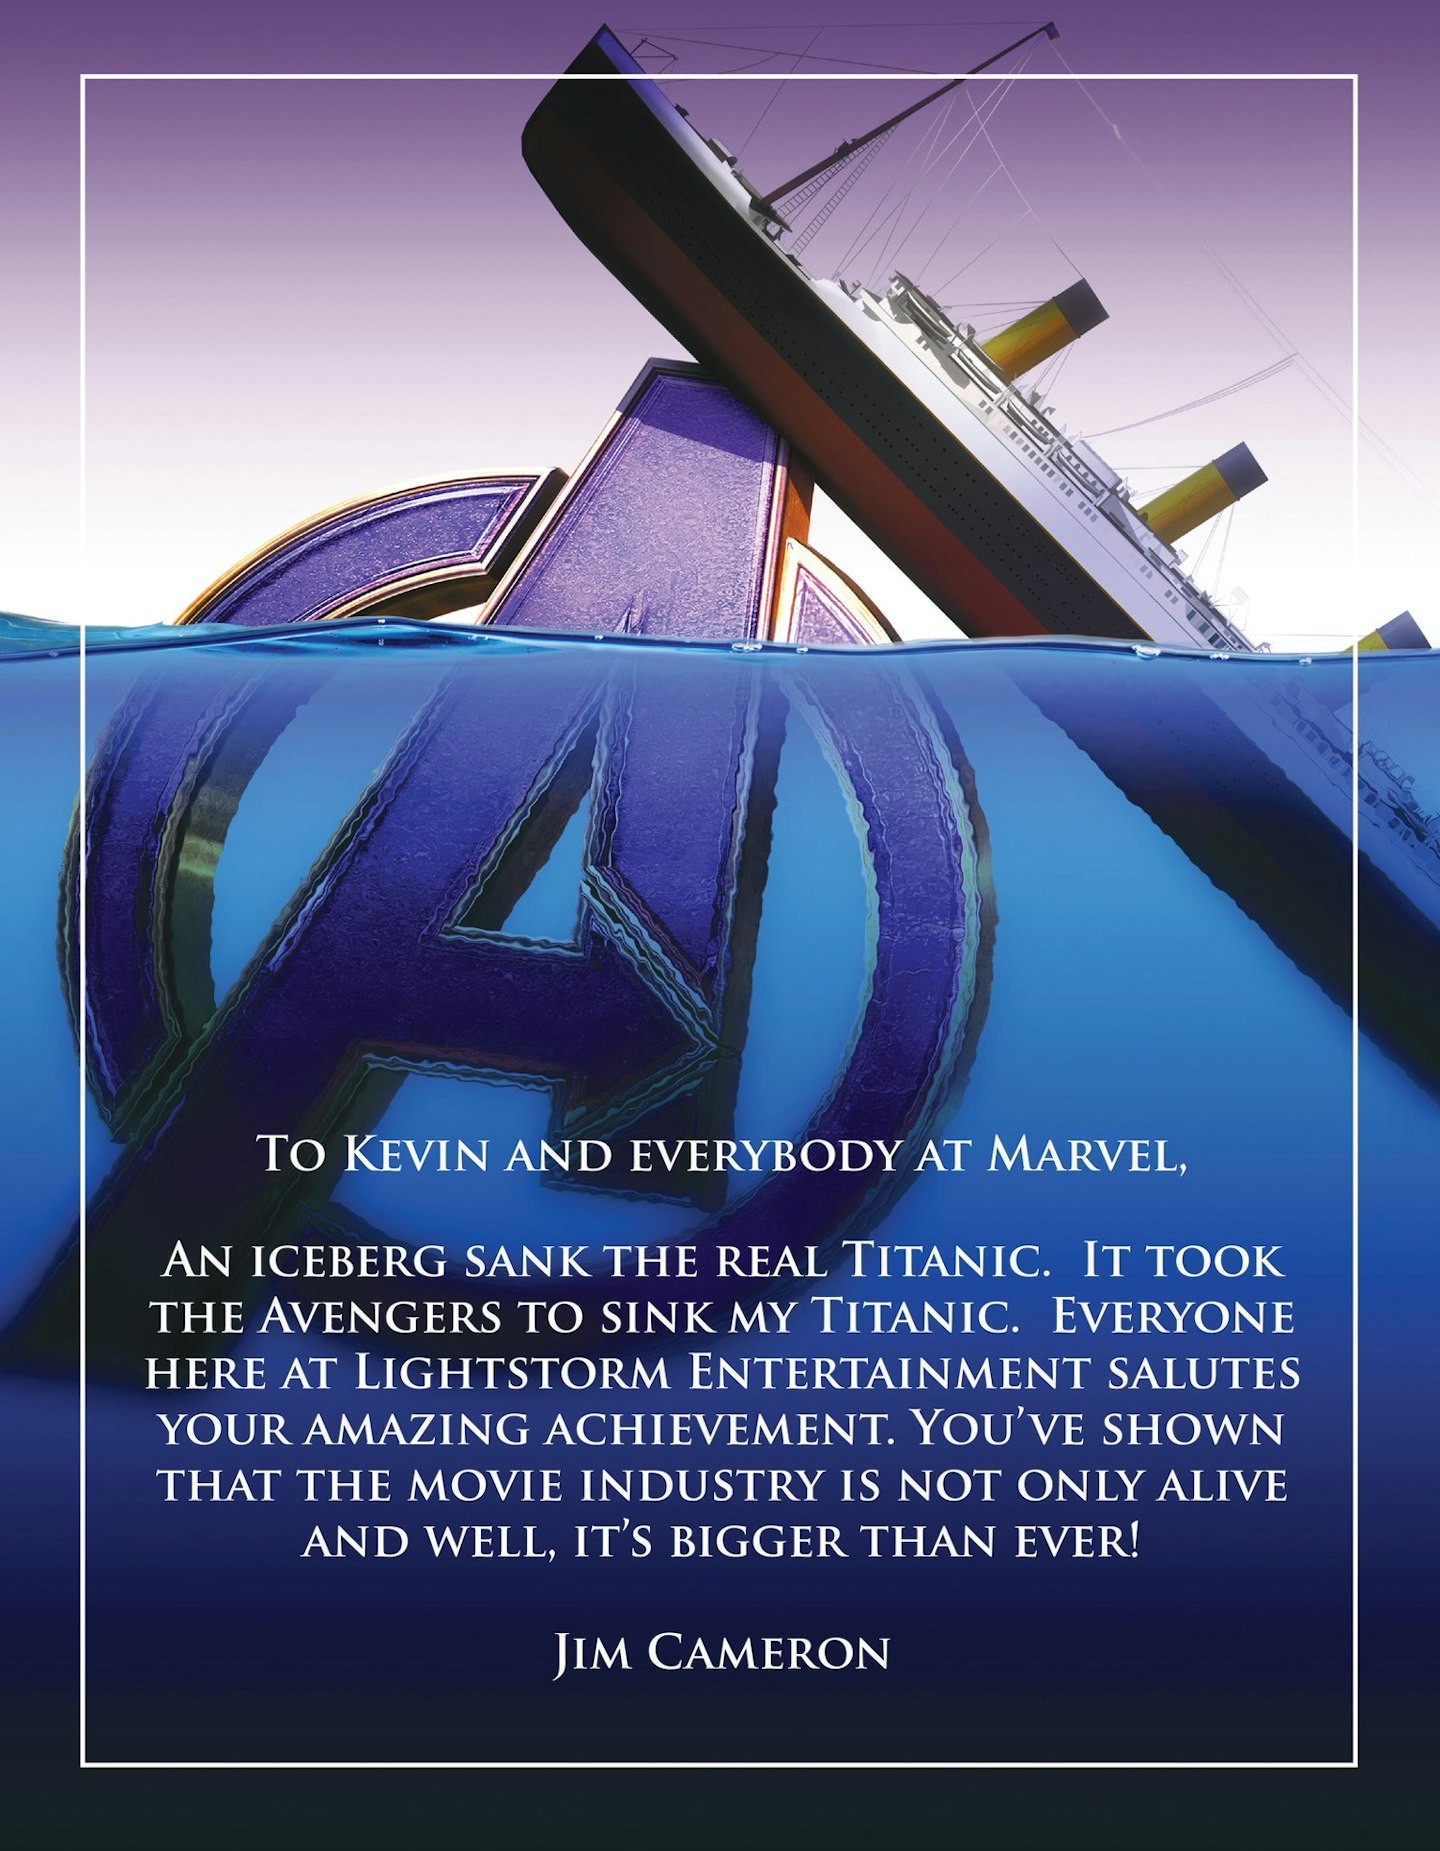 Titanic Avengers box office